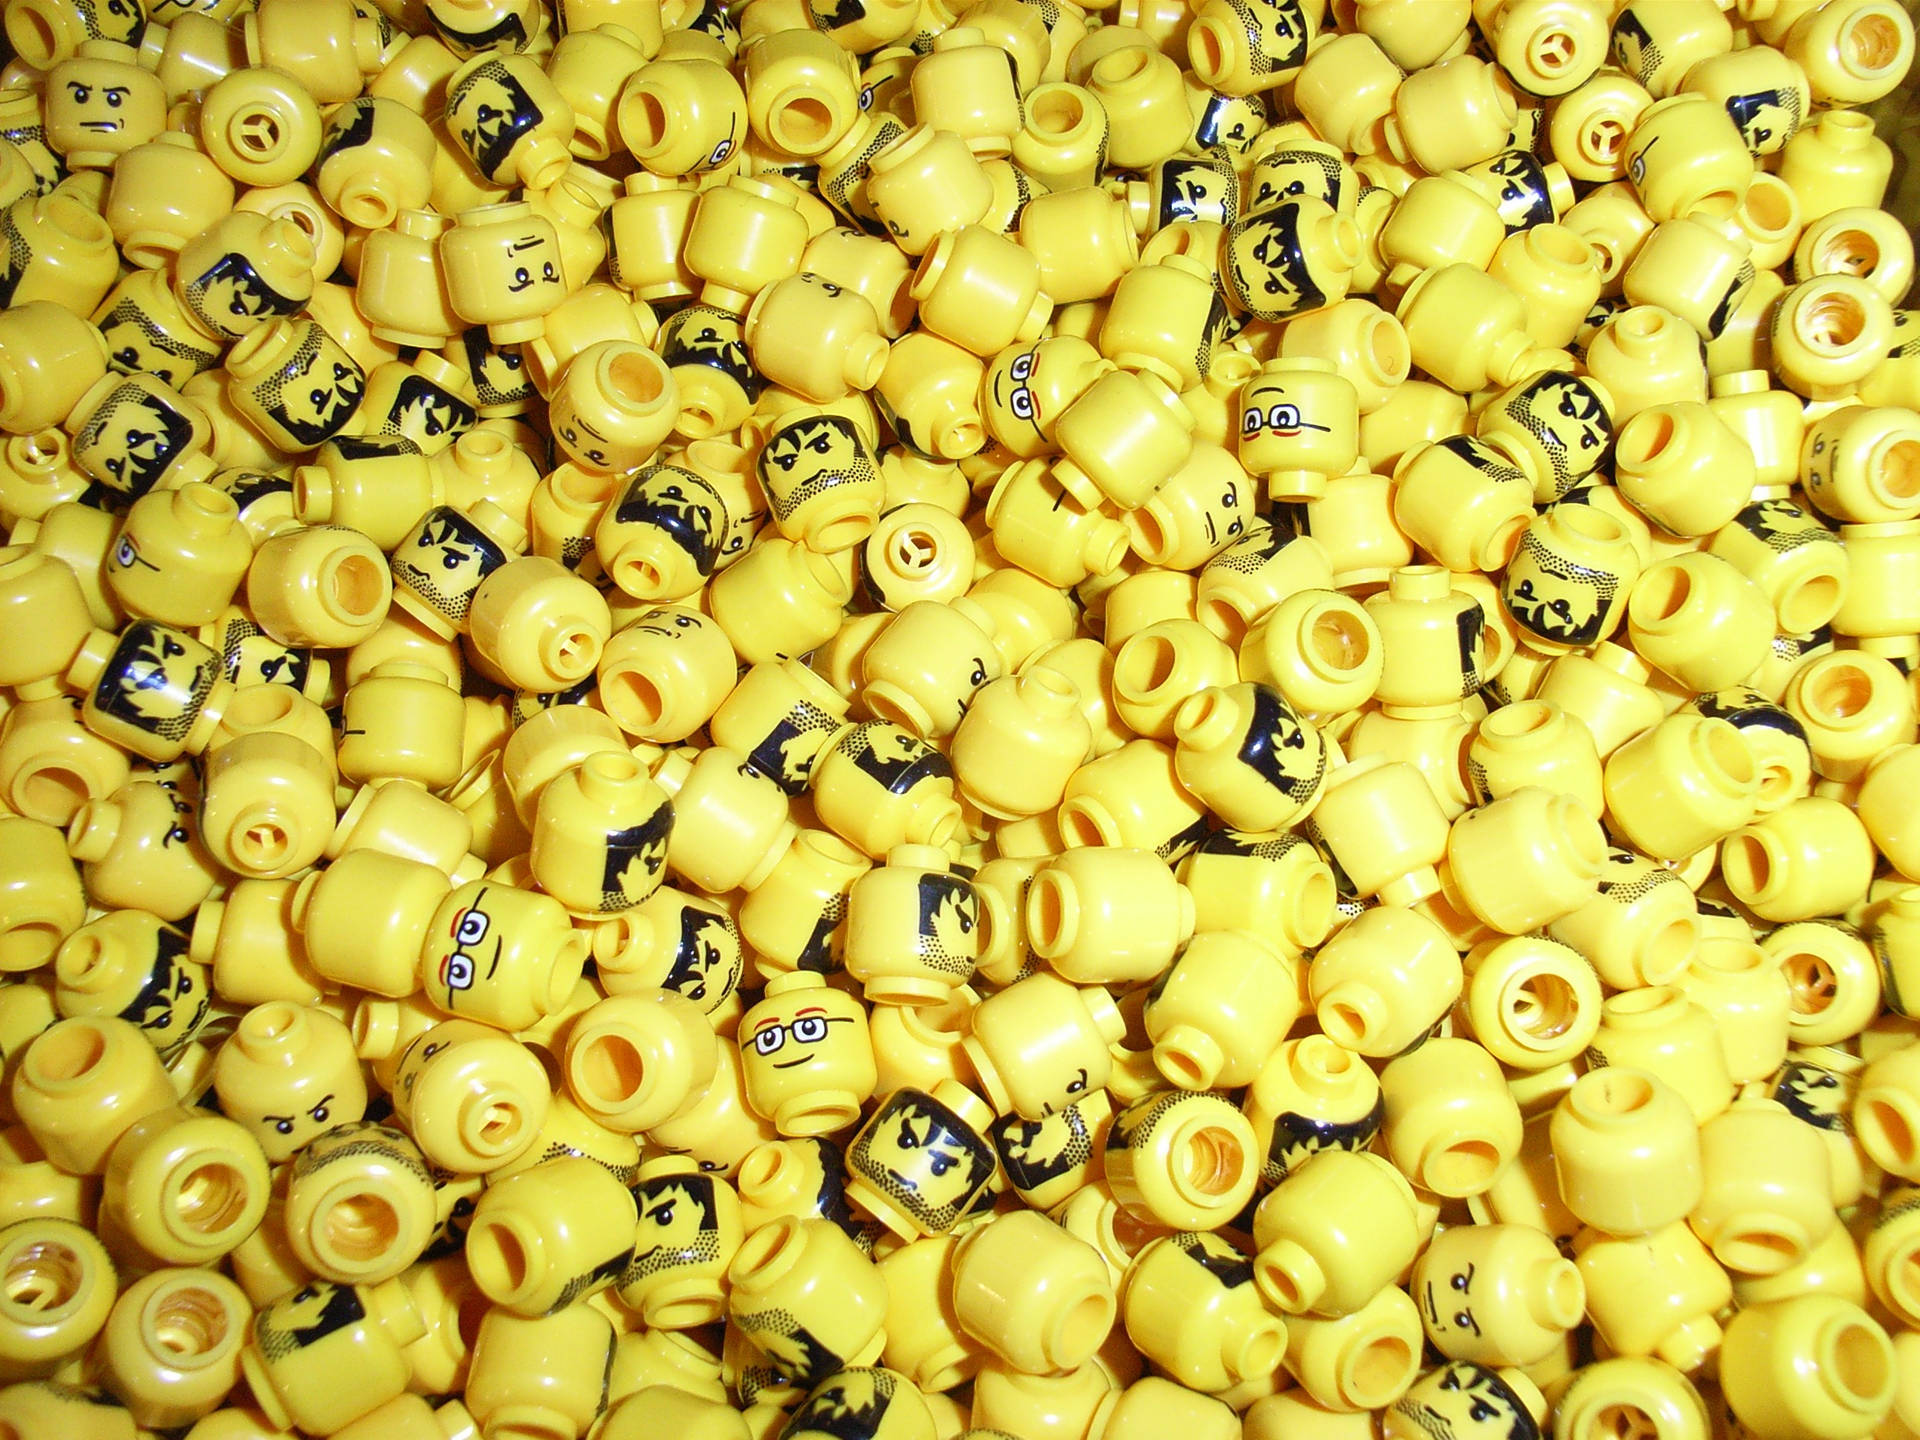 Yellow Hd Lego Heads